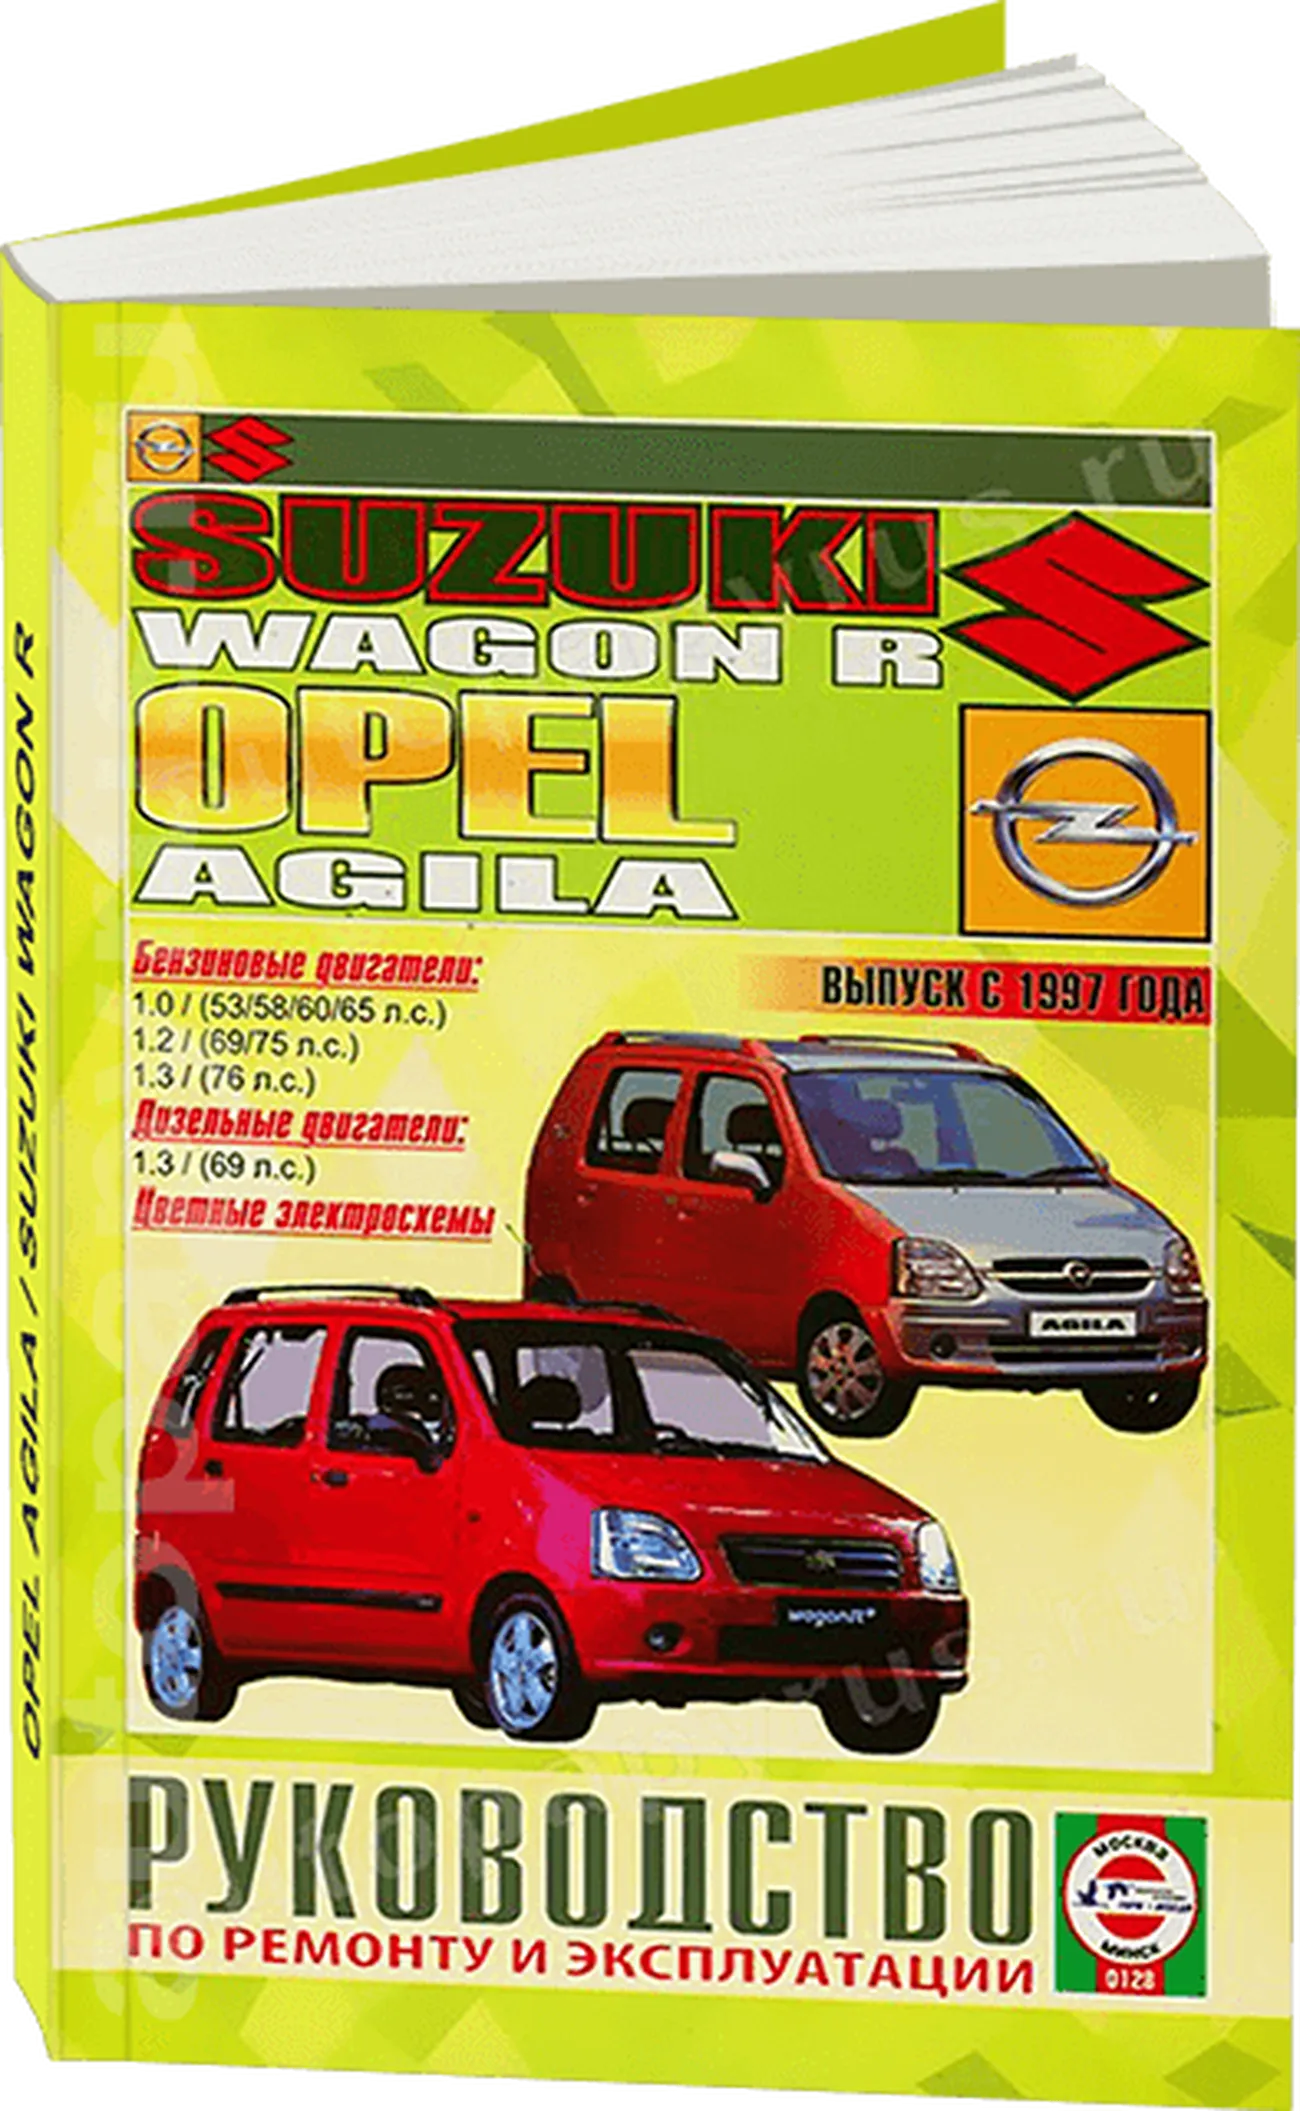 Книга: SUZUKI WAGON R / OPEL AGILA (б , д) с 1997 г.в., рем., экспл., то | Чижовка